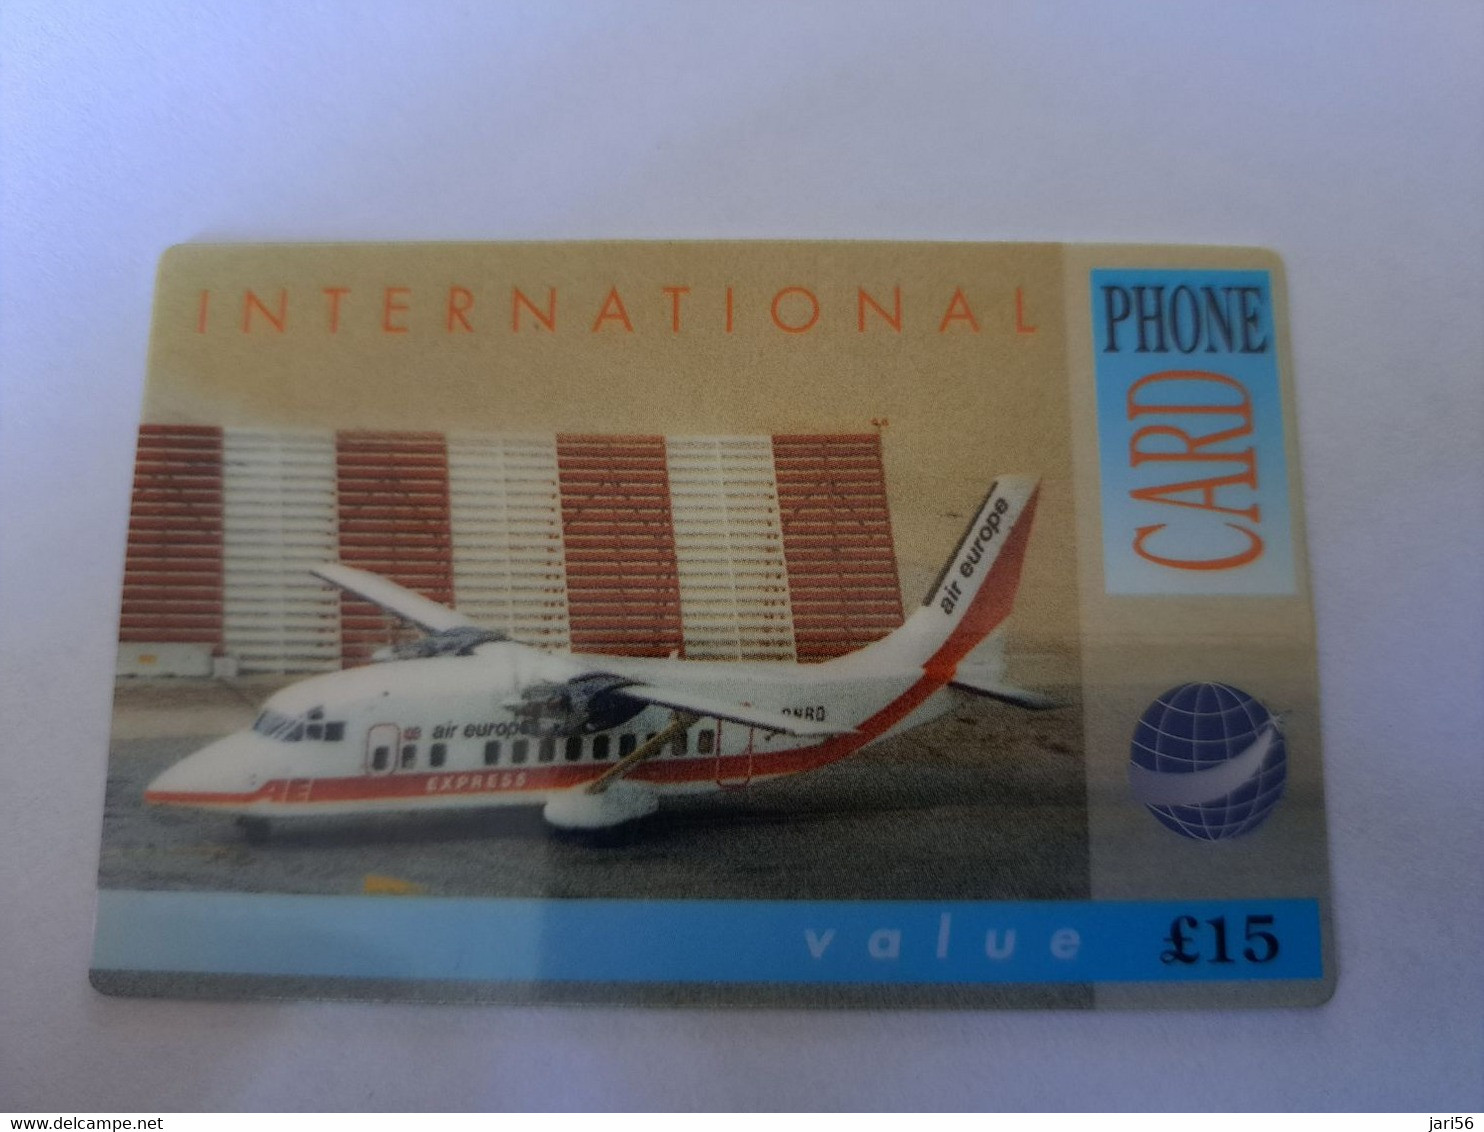 GREAT BRITAIN   15 POUND   / AEROPLANE  AIR EUROPE     DIT PHONECARD    PREPAID CARD      **12130** - Collezioni